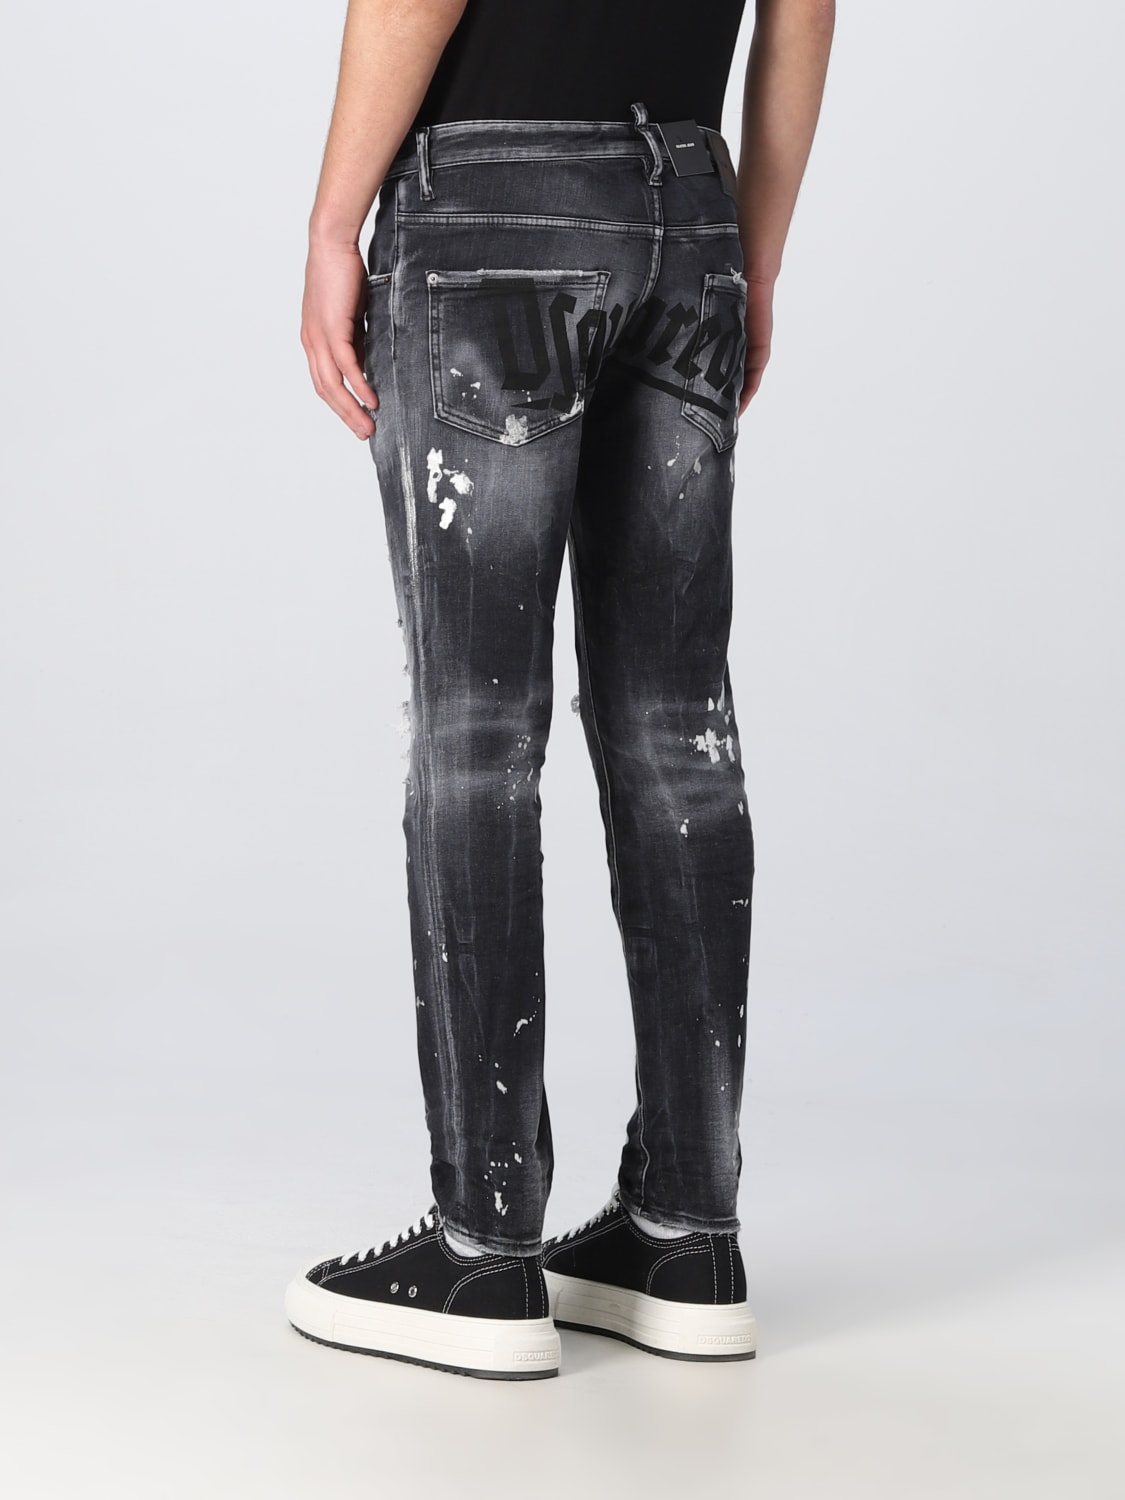 denim jeans - Black | Dsquared2 jeans online on GIGLIO.COM